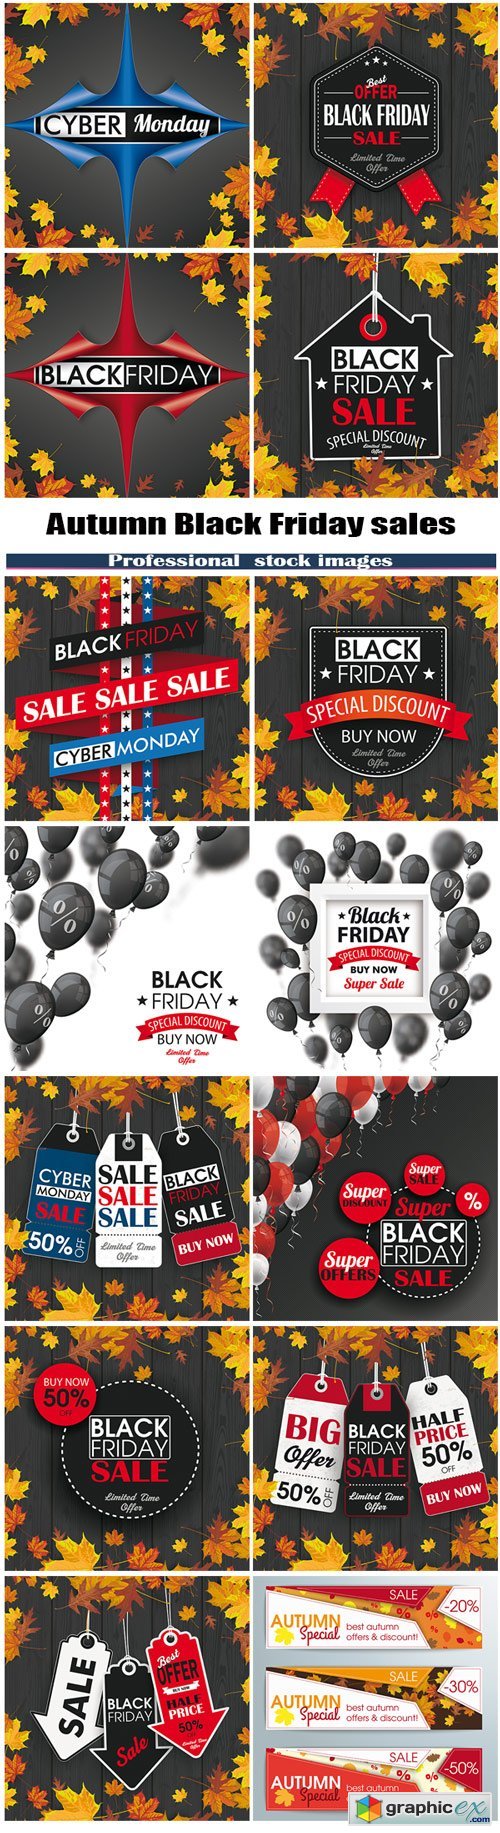 Autumn Black Friday sales